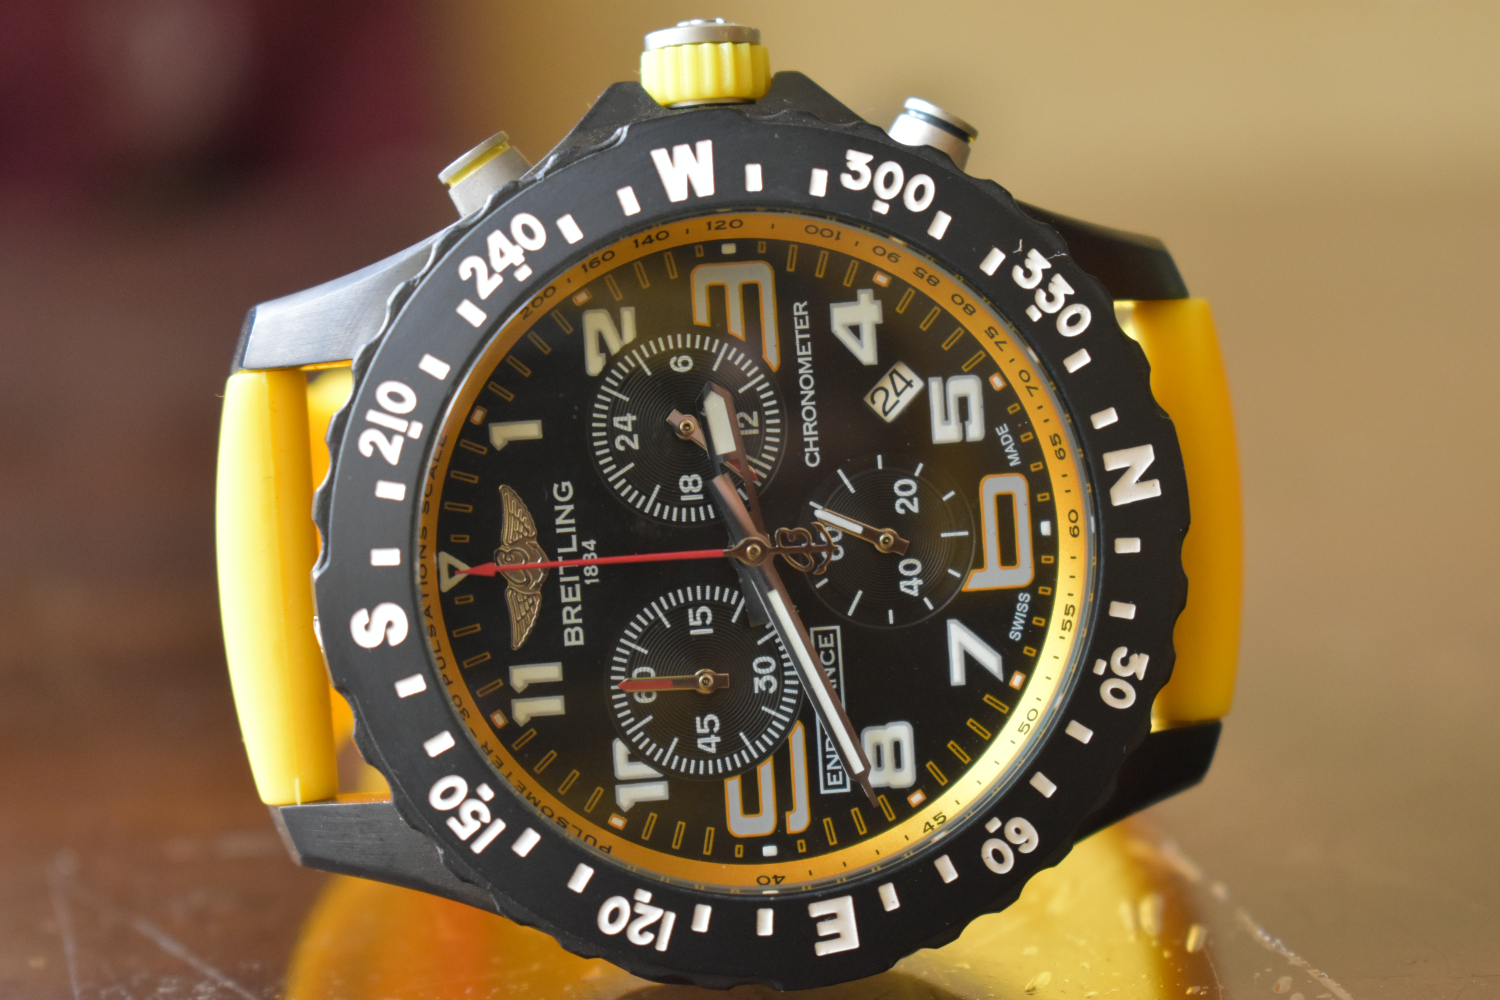 Breitling Endurance Pro Quartz Chronograph Yellow Rubber Straps Men's Watch for sale in Nairobi,Kenya.